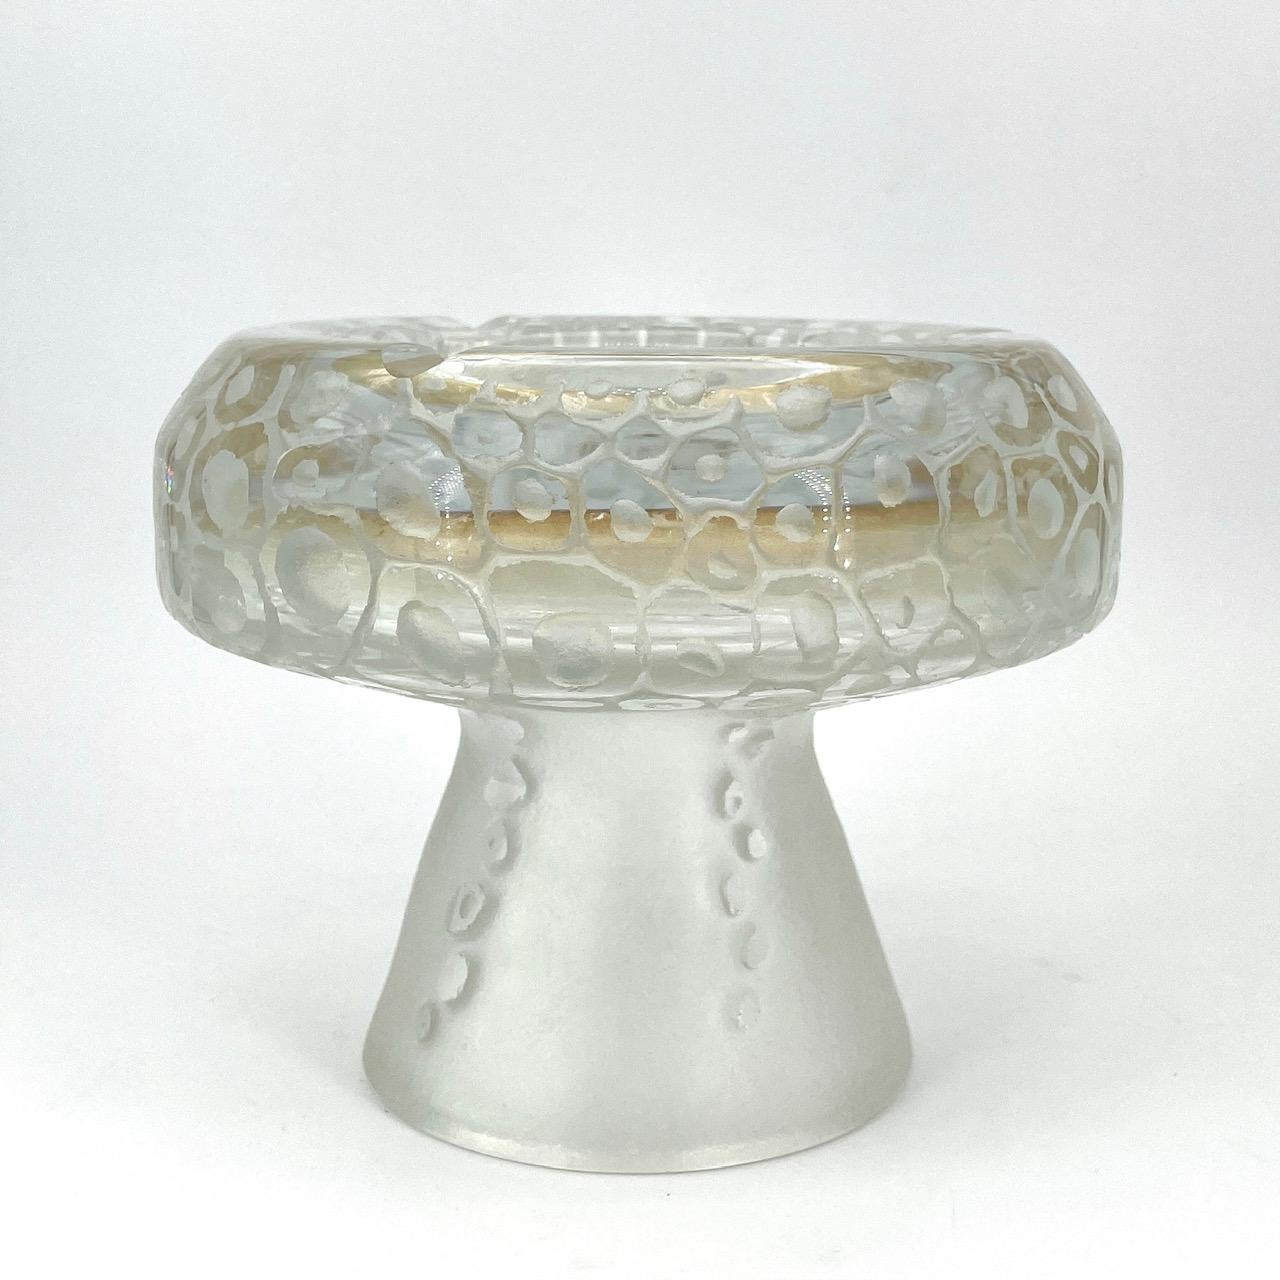 Scandinavian Modern 1960s Dolomite Mushroom Art Glass Footed Ashtray Vintage Italian Mid-Century Era For Sale